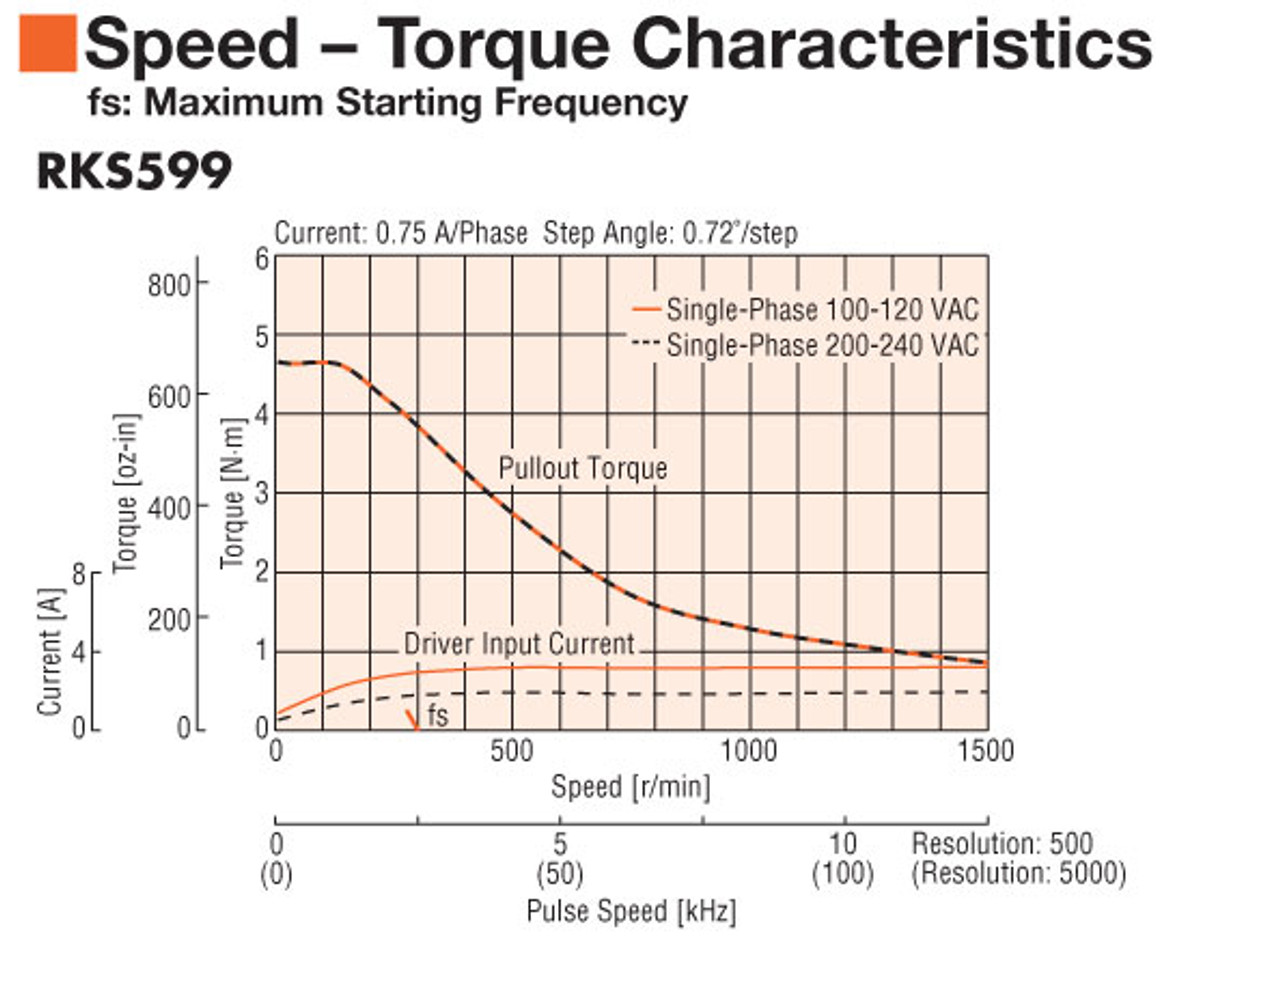 PKE599MC - Speed-Torque